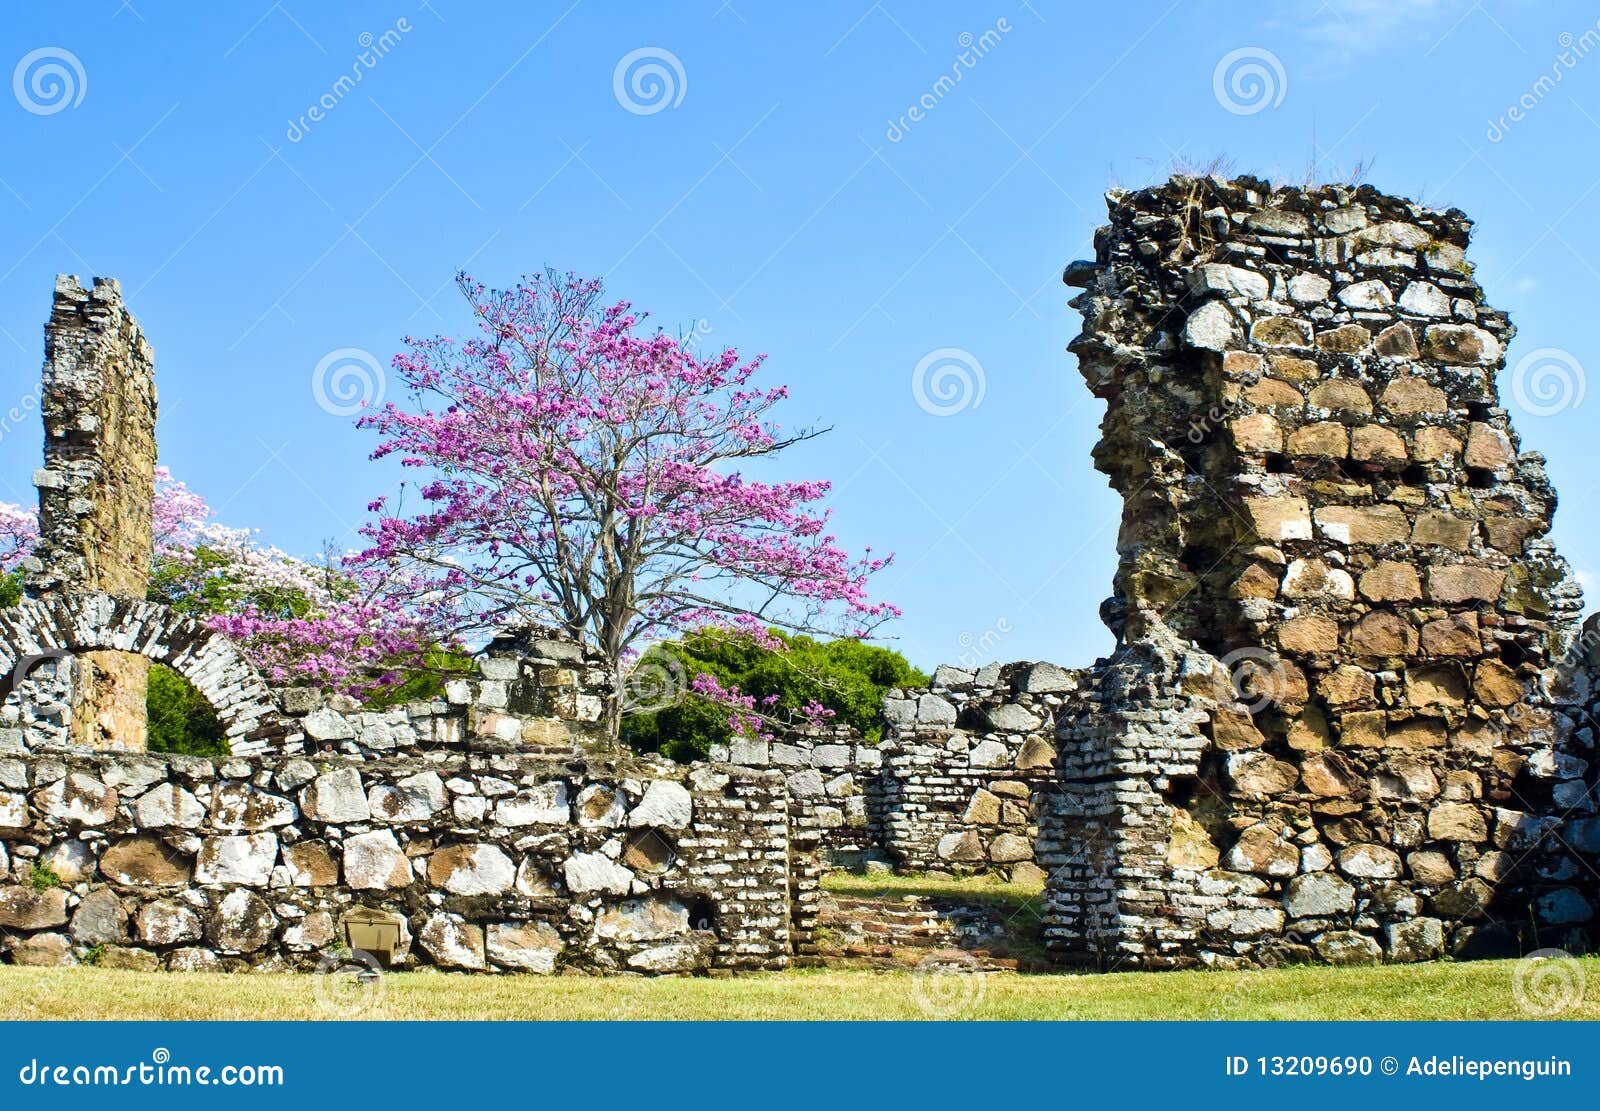 ruins of old panama